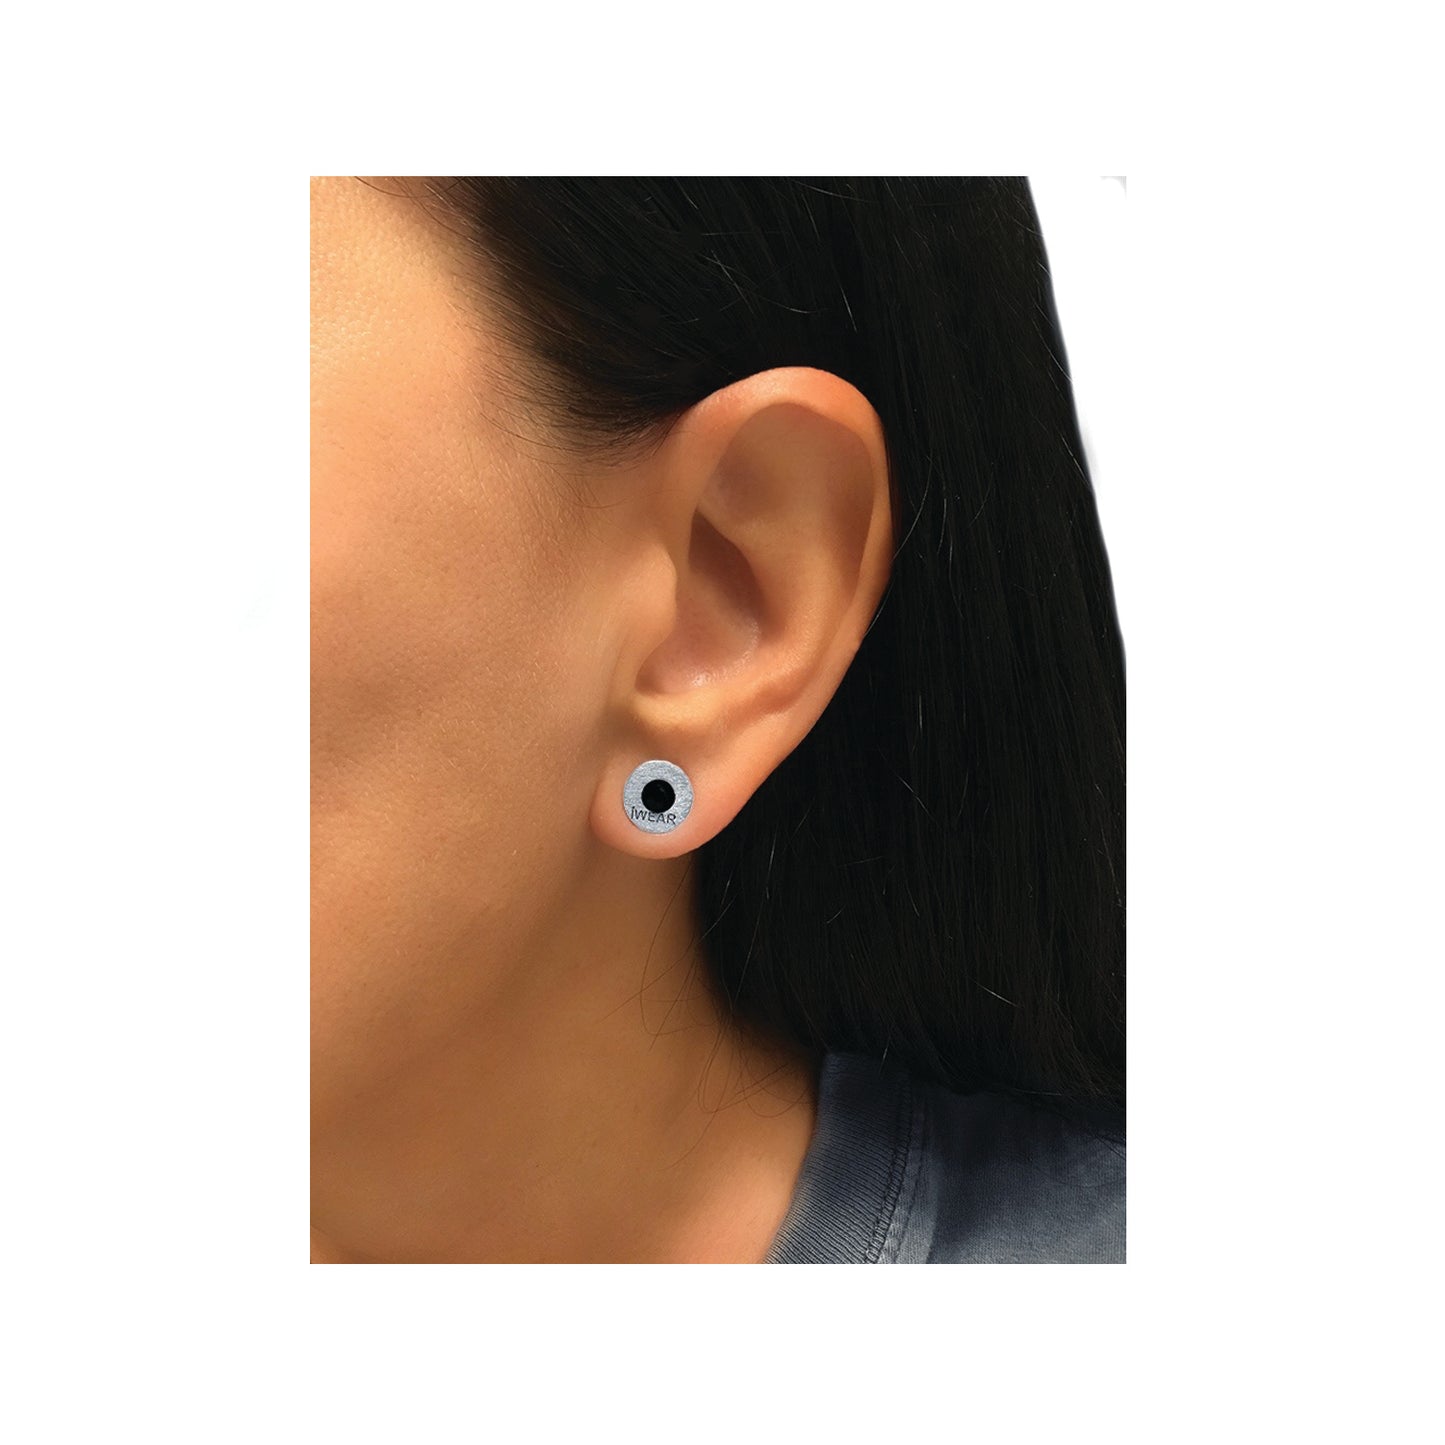 mini aluminum iWEAR washer earrings - black